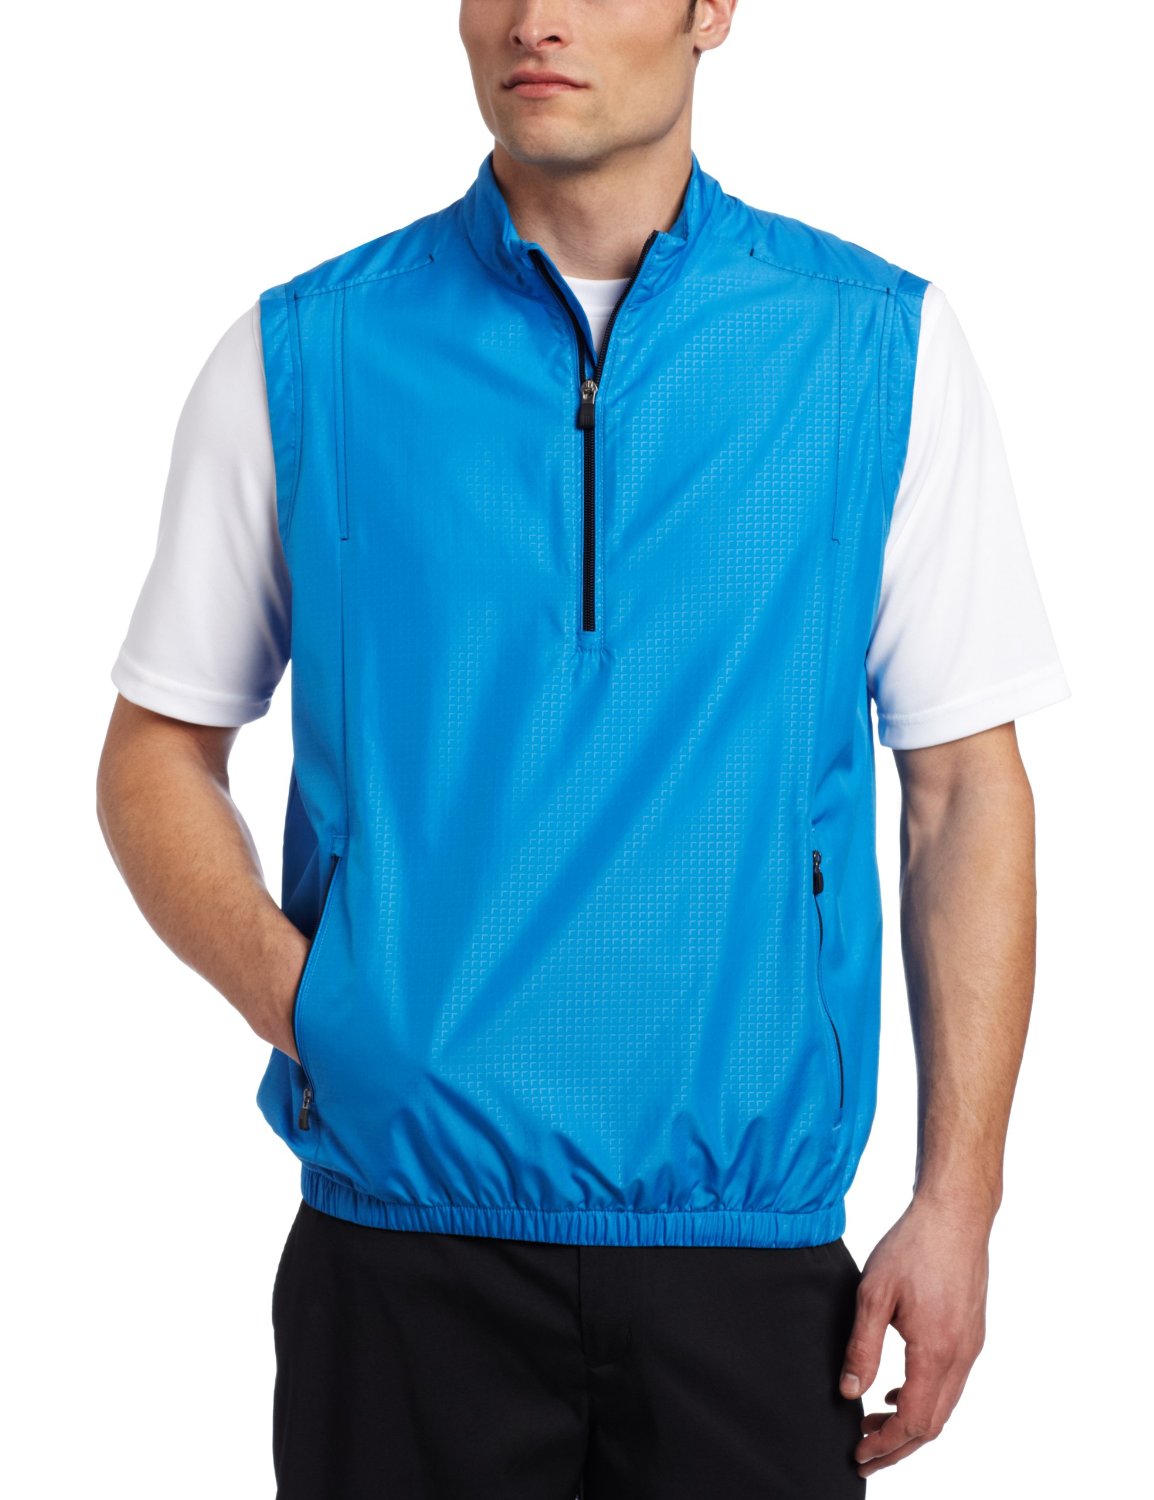 Adidas Climaproof Wind Zip Golf Vests